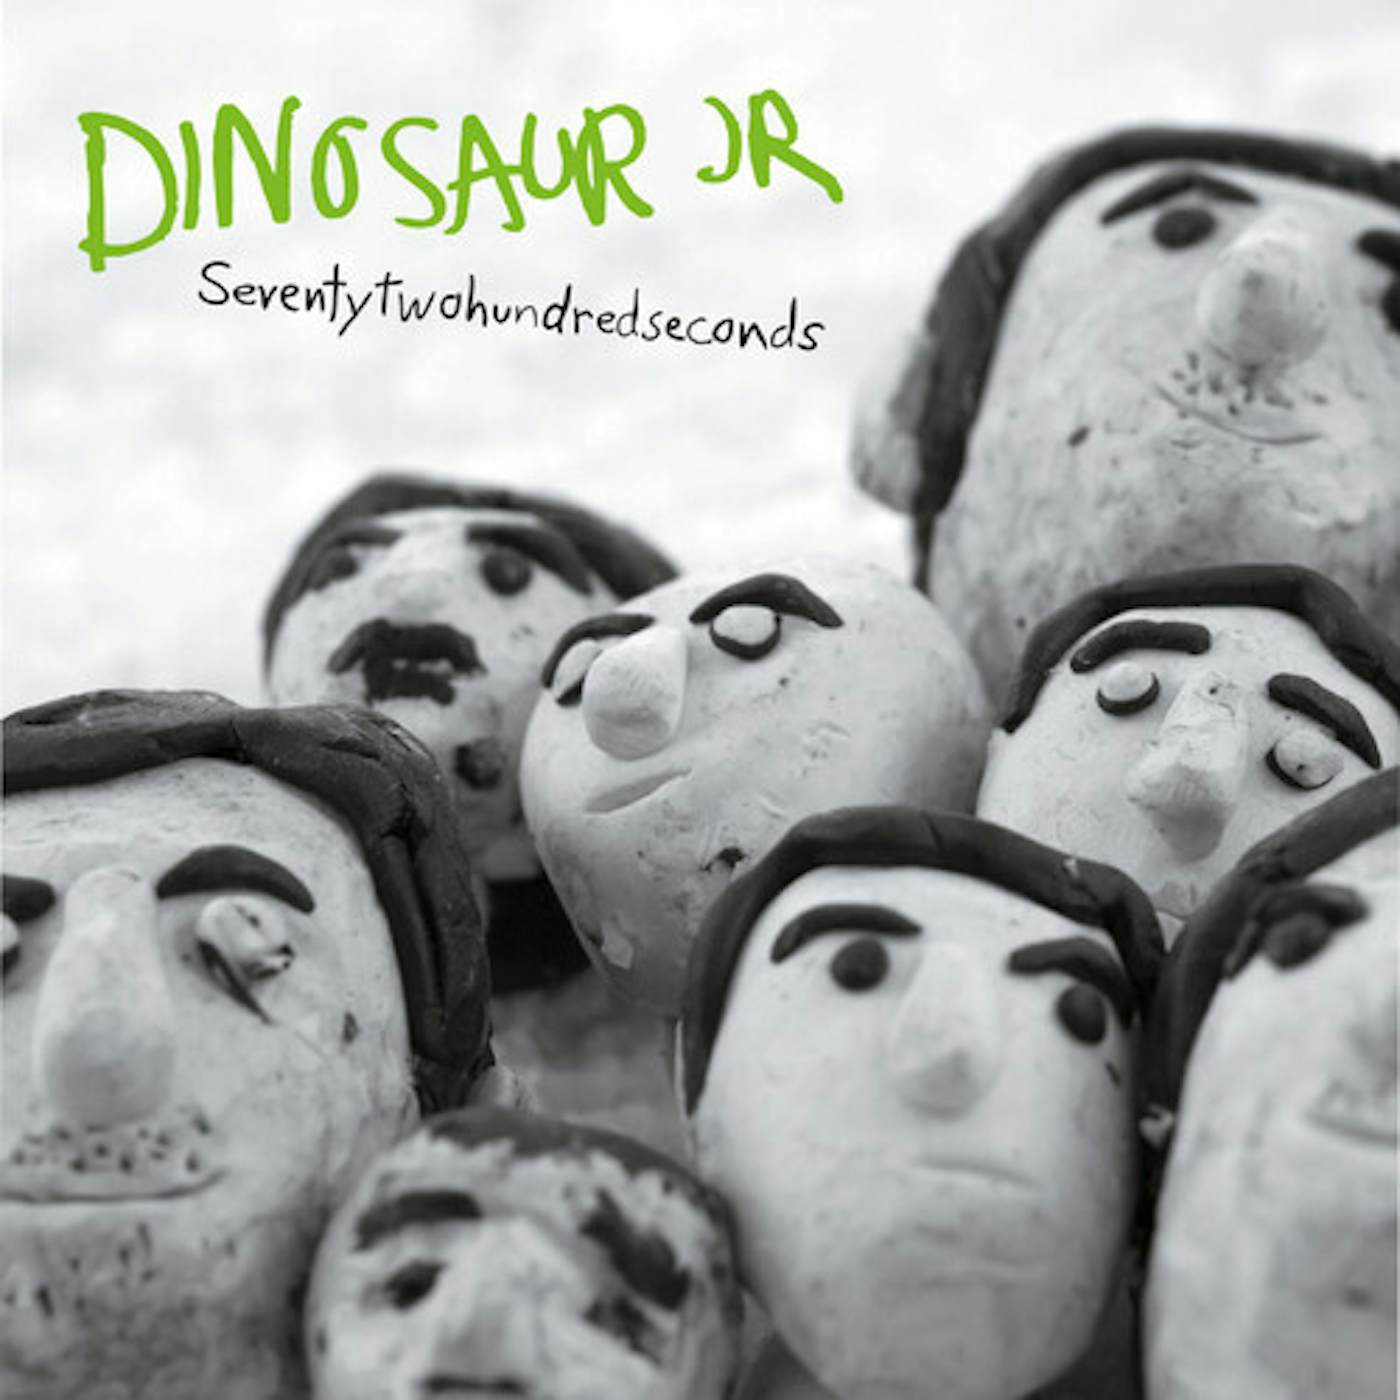 Dinosaur Jr. SEVENTYTWOHUNDREDSECONDS: LIVE ON MTV 1993 Vinyl Record